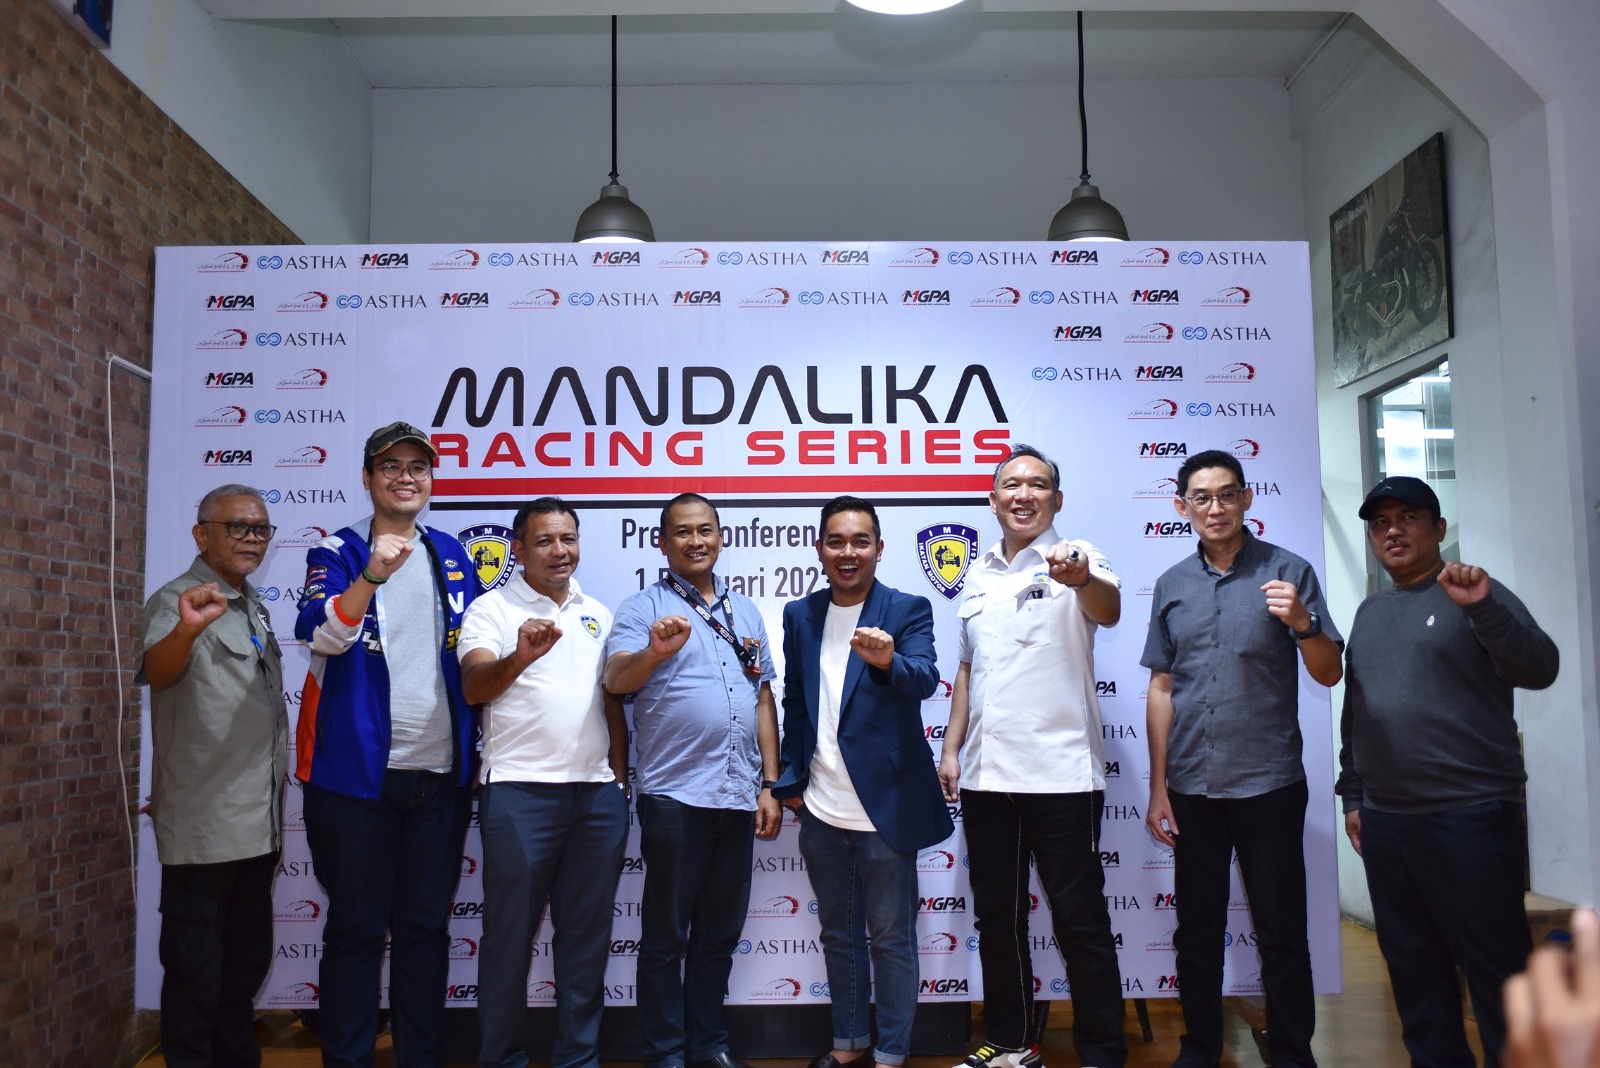 Mandalika Racing Series Press Conference